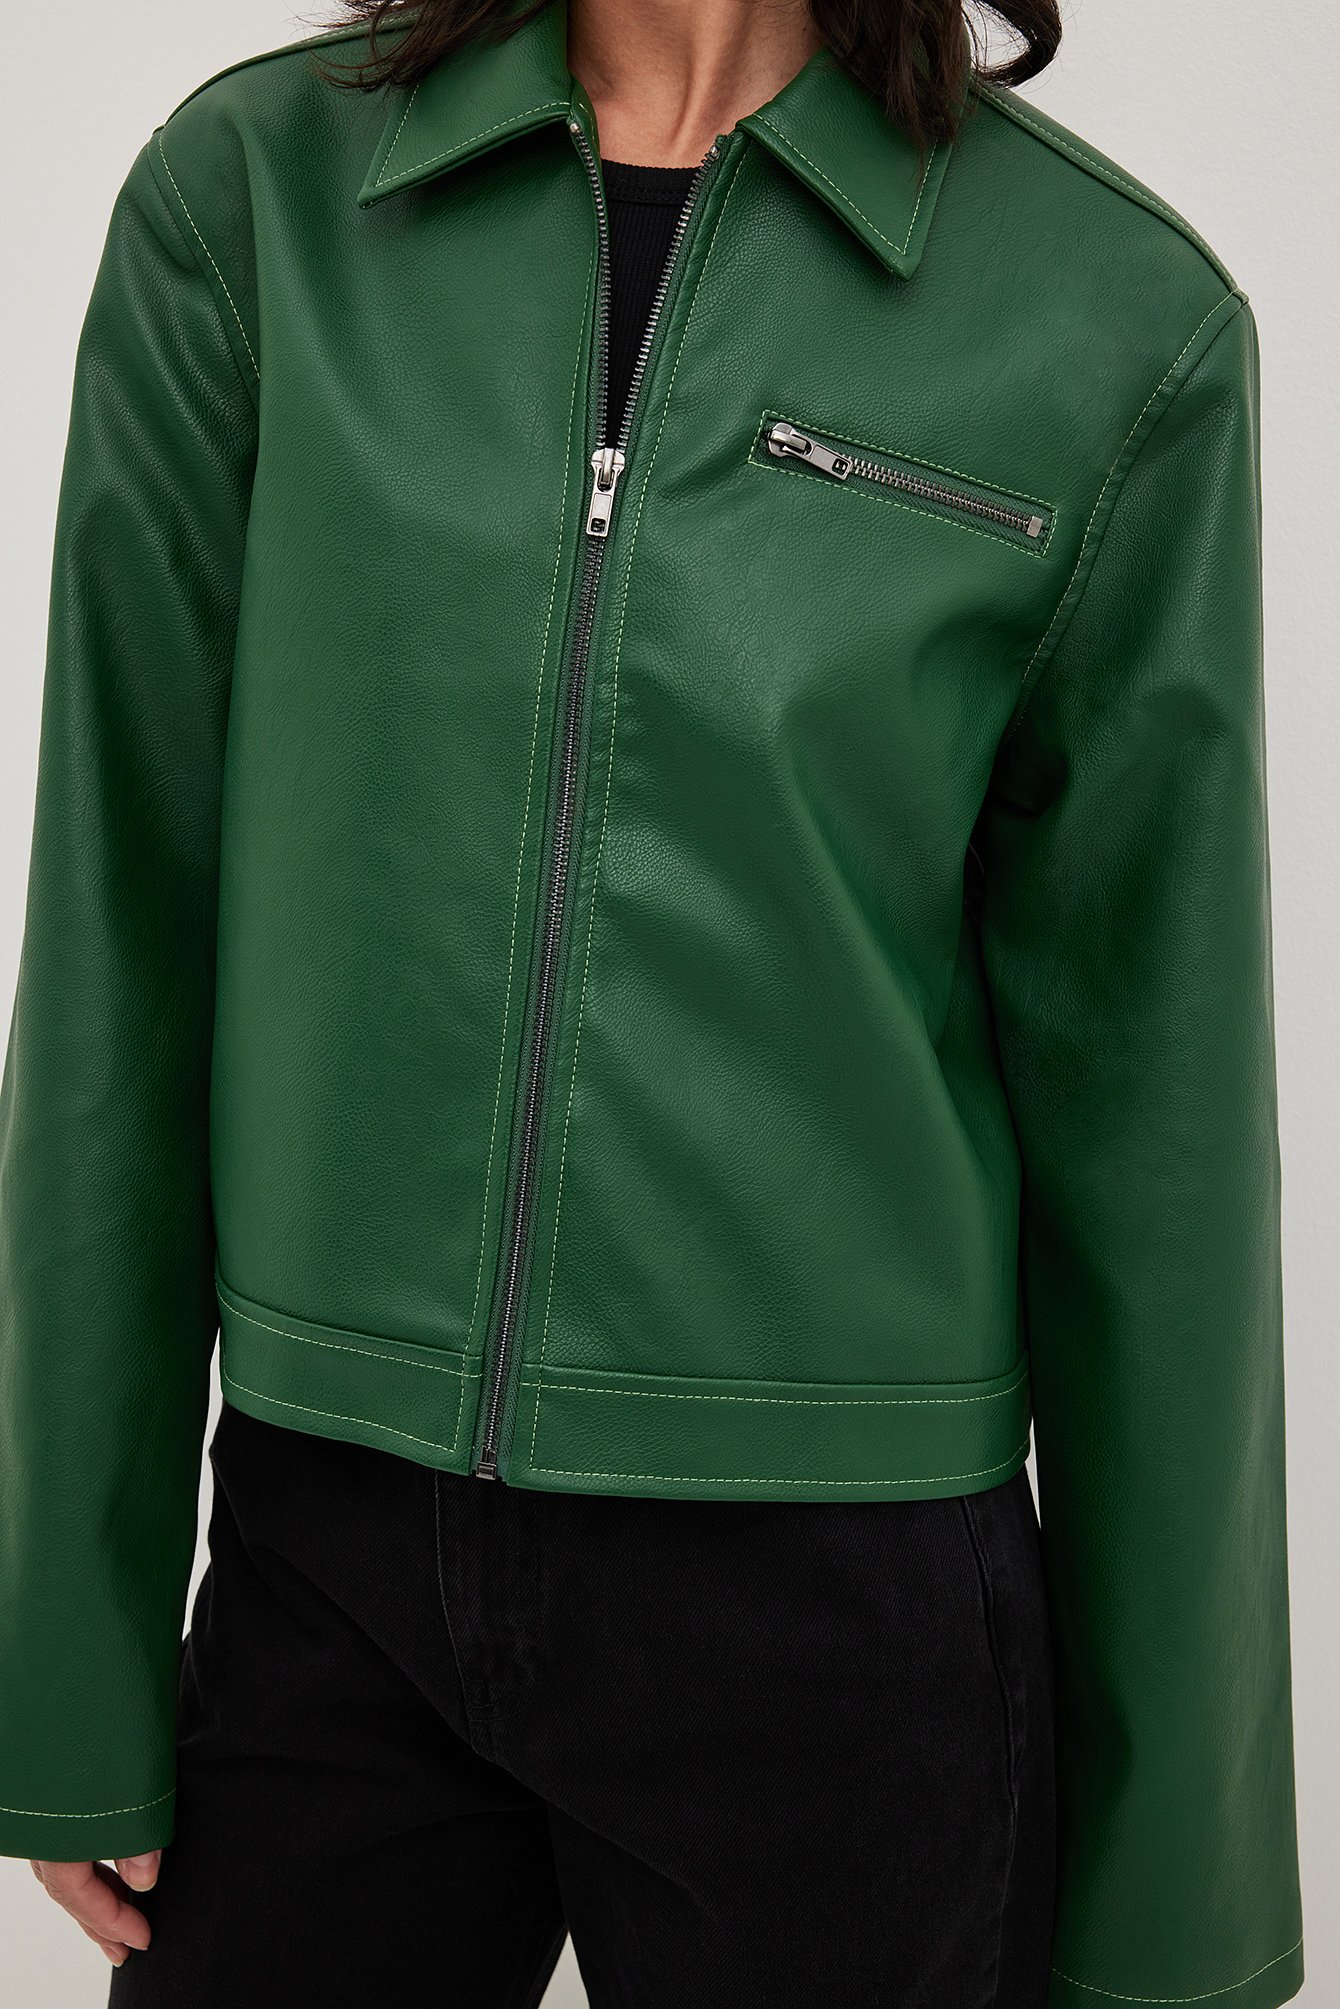 円高還元 emerald Stitch green contrast Green stitching jaket ...